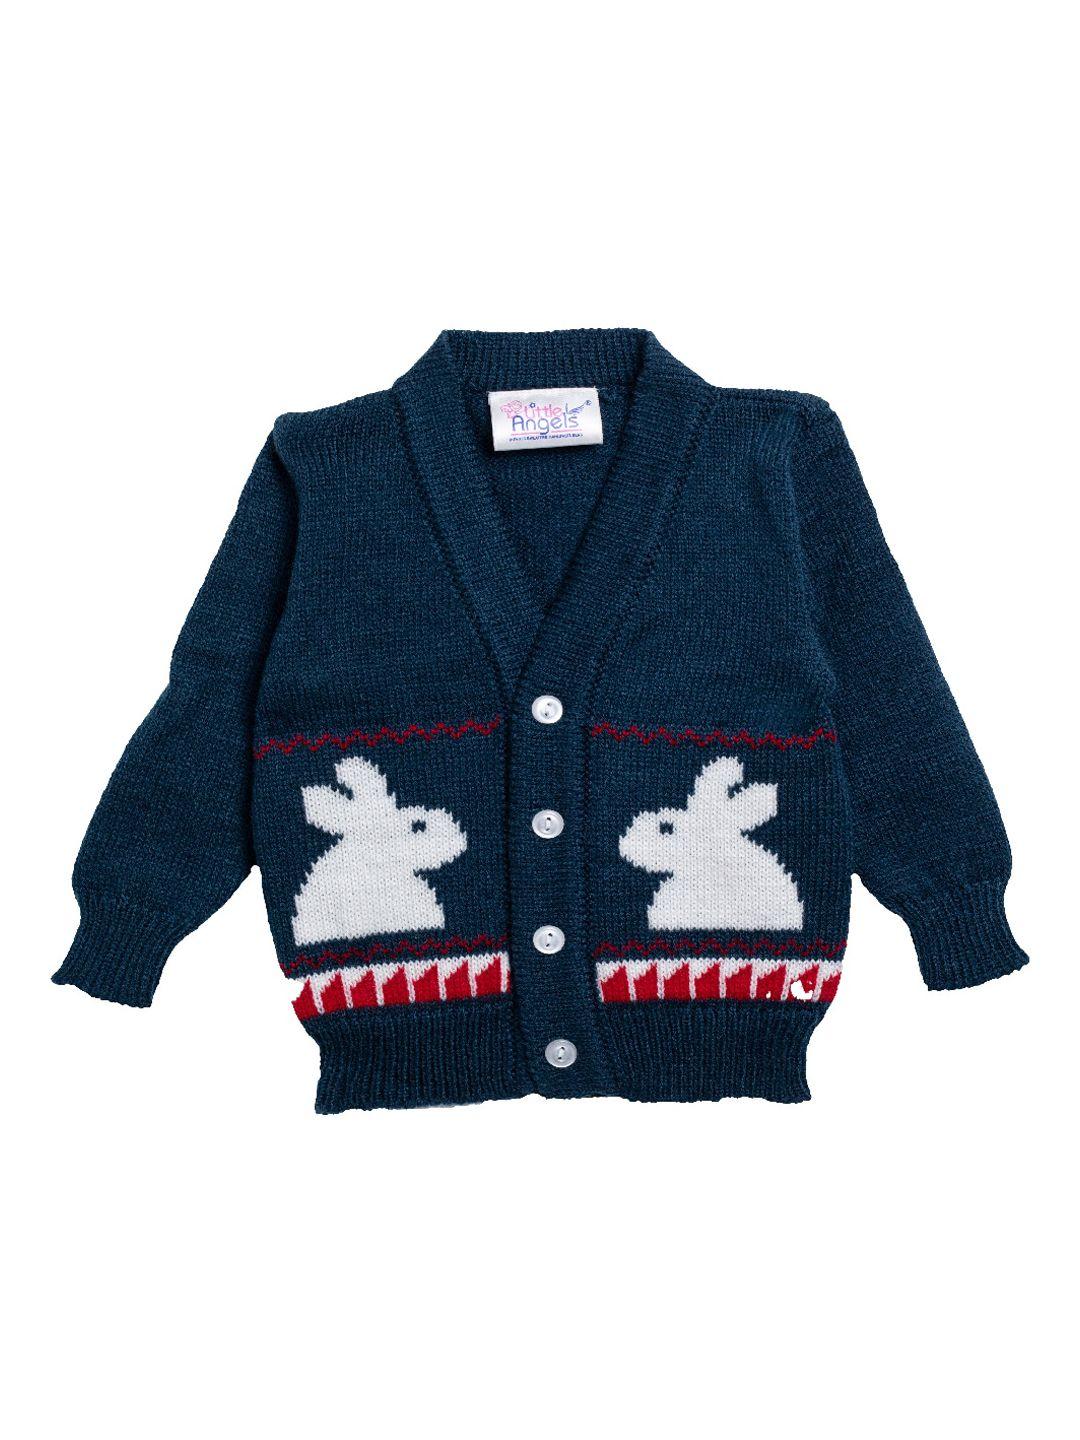 little-angels-kids-navy-blue-&-white-self-design-cardigan-sweater